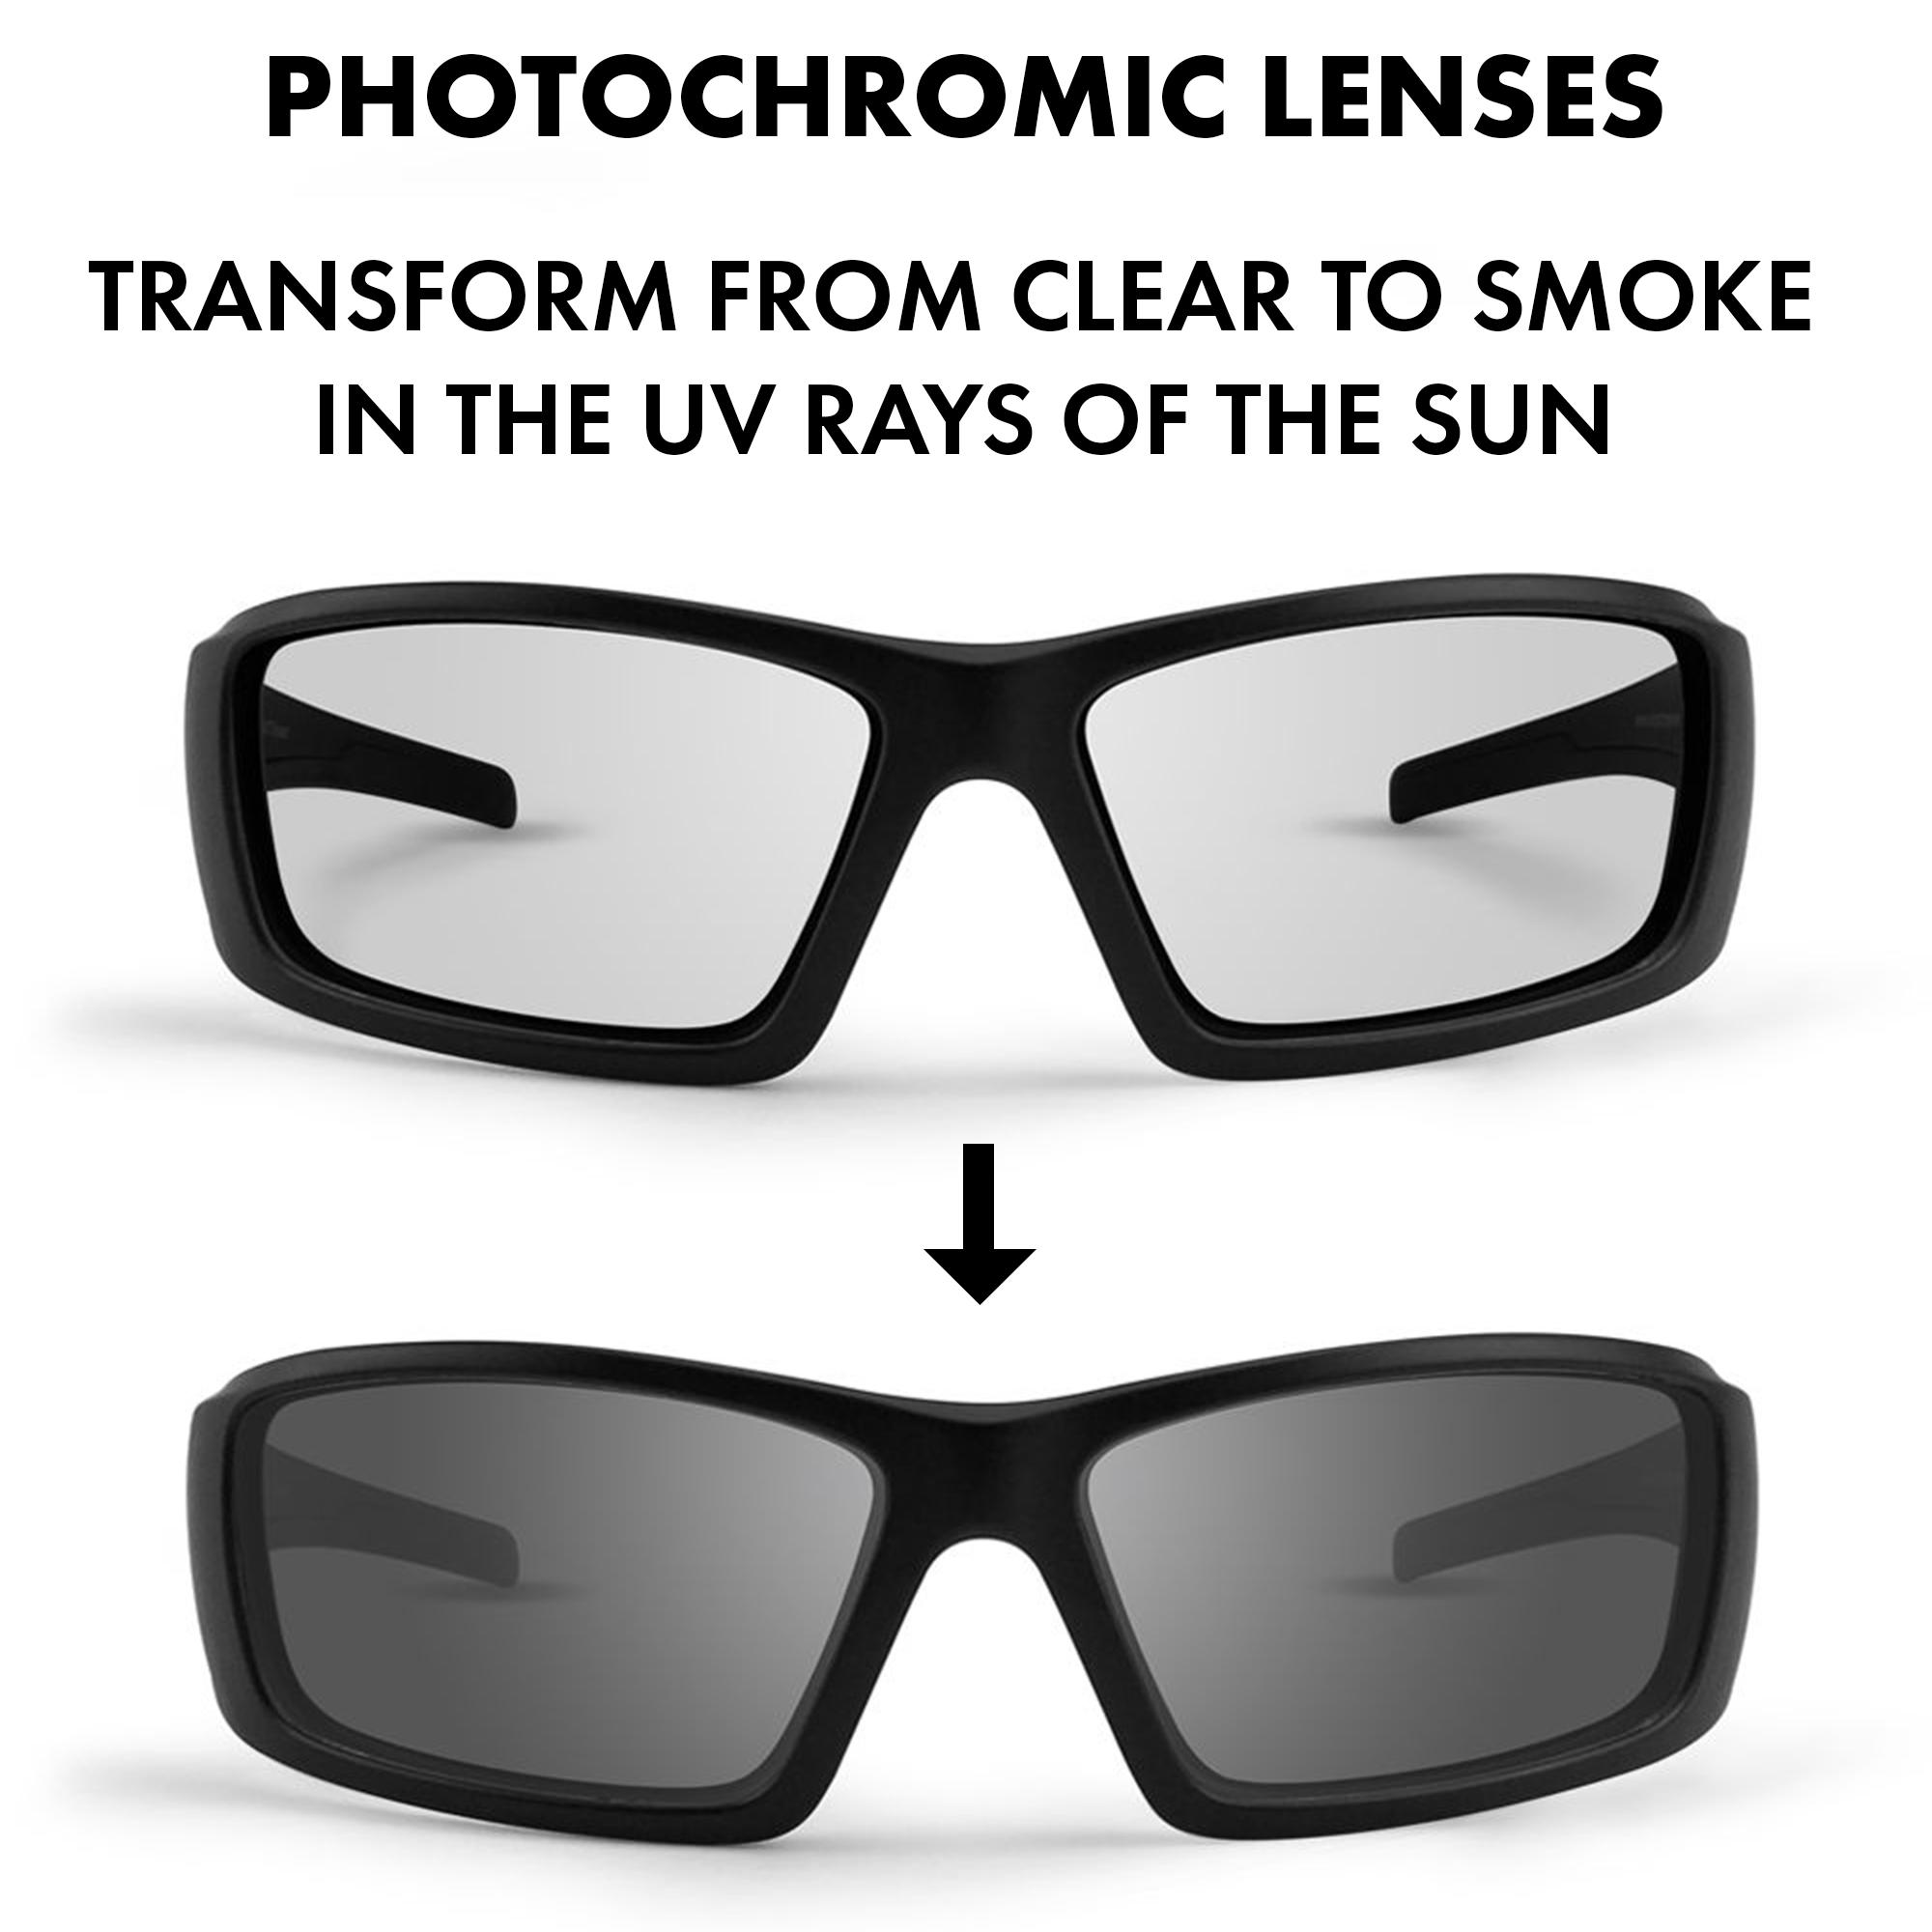 Epoch Eyewear EPOCH 3 Photochromic Motorcycle Sunglasses Black Frames Clear to Smoke lens - image 3 of 6